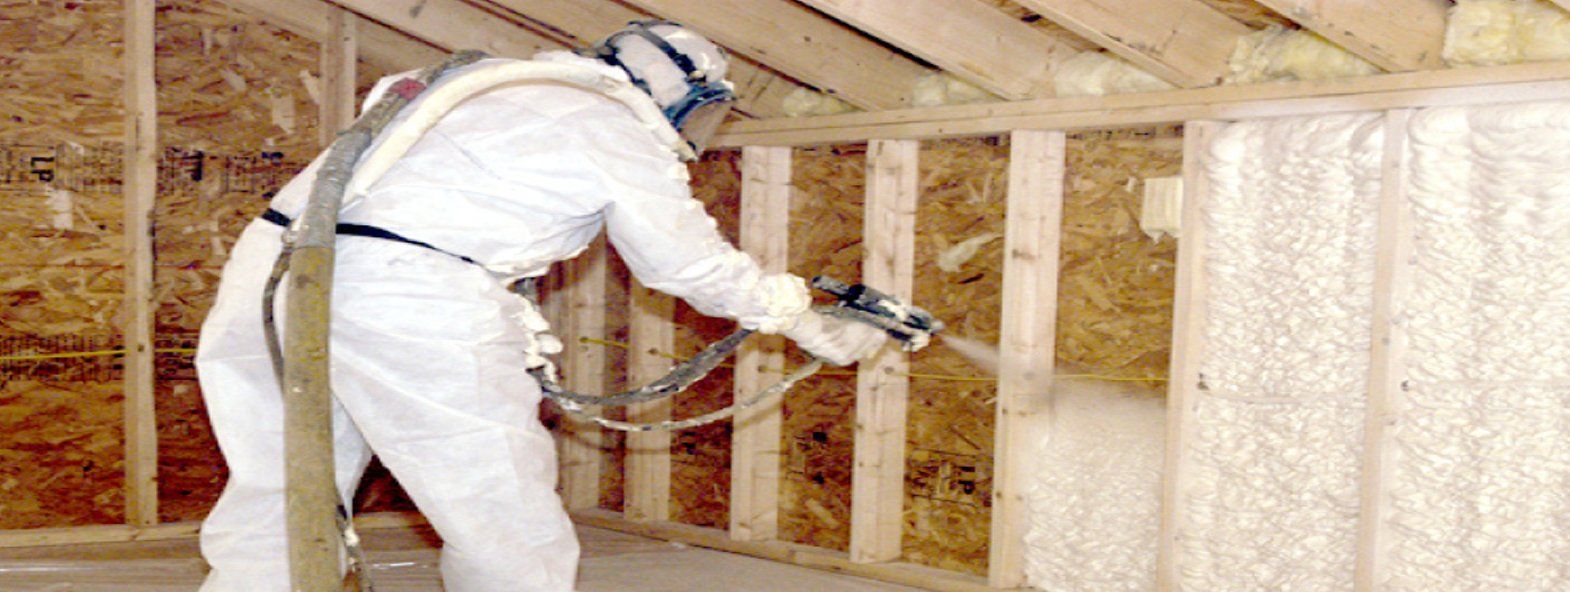 Man applying insulation on wall